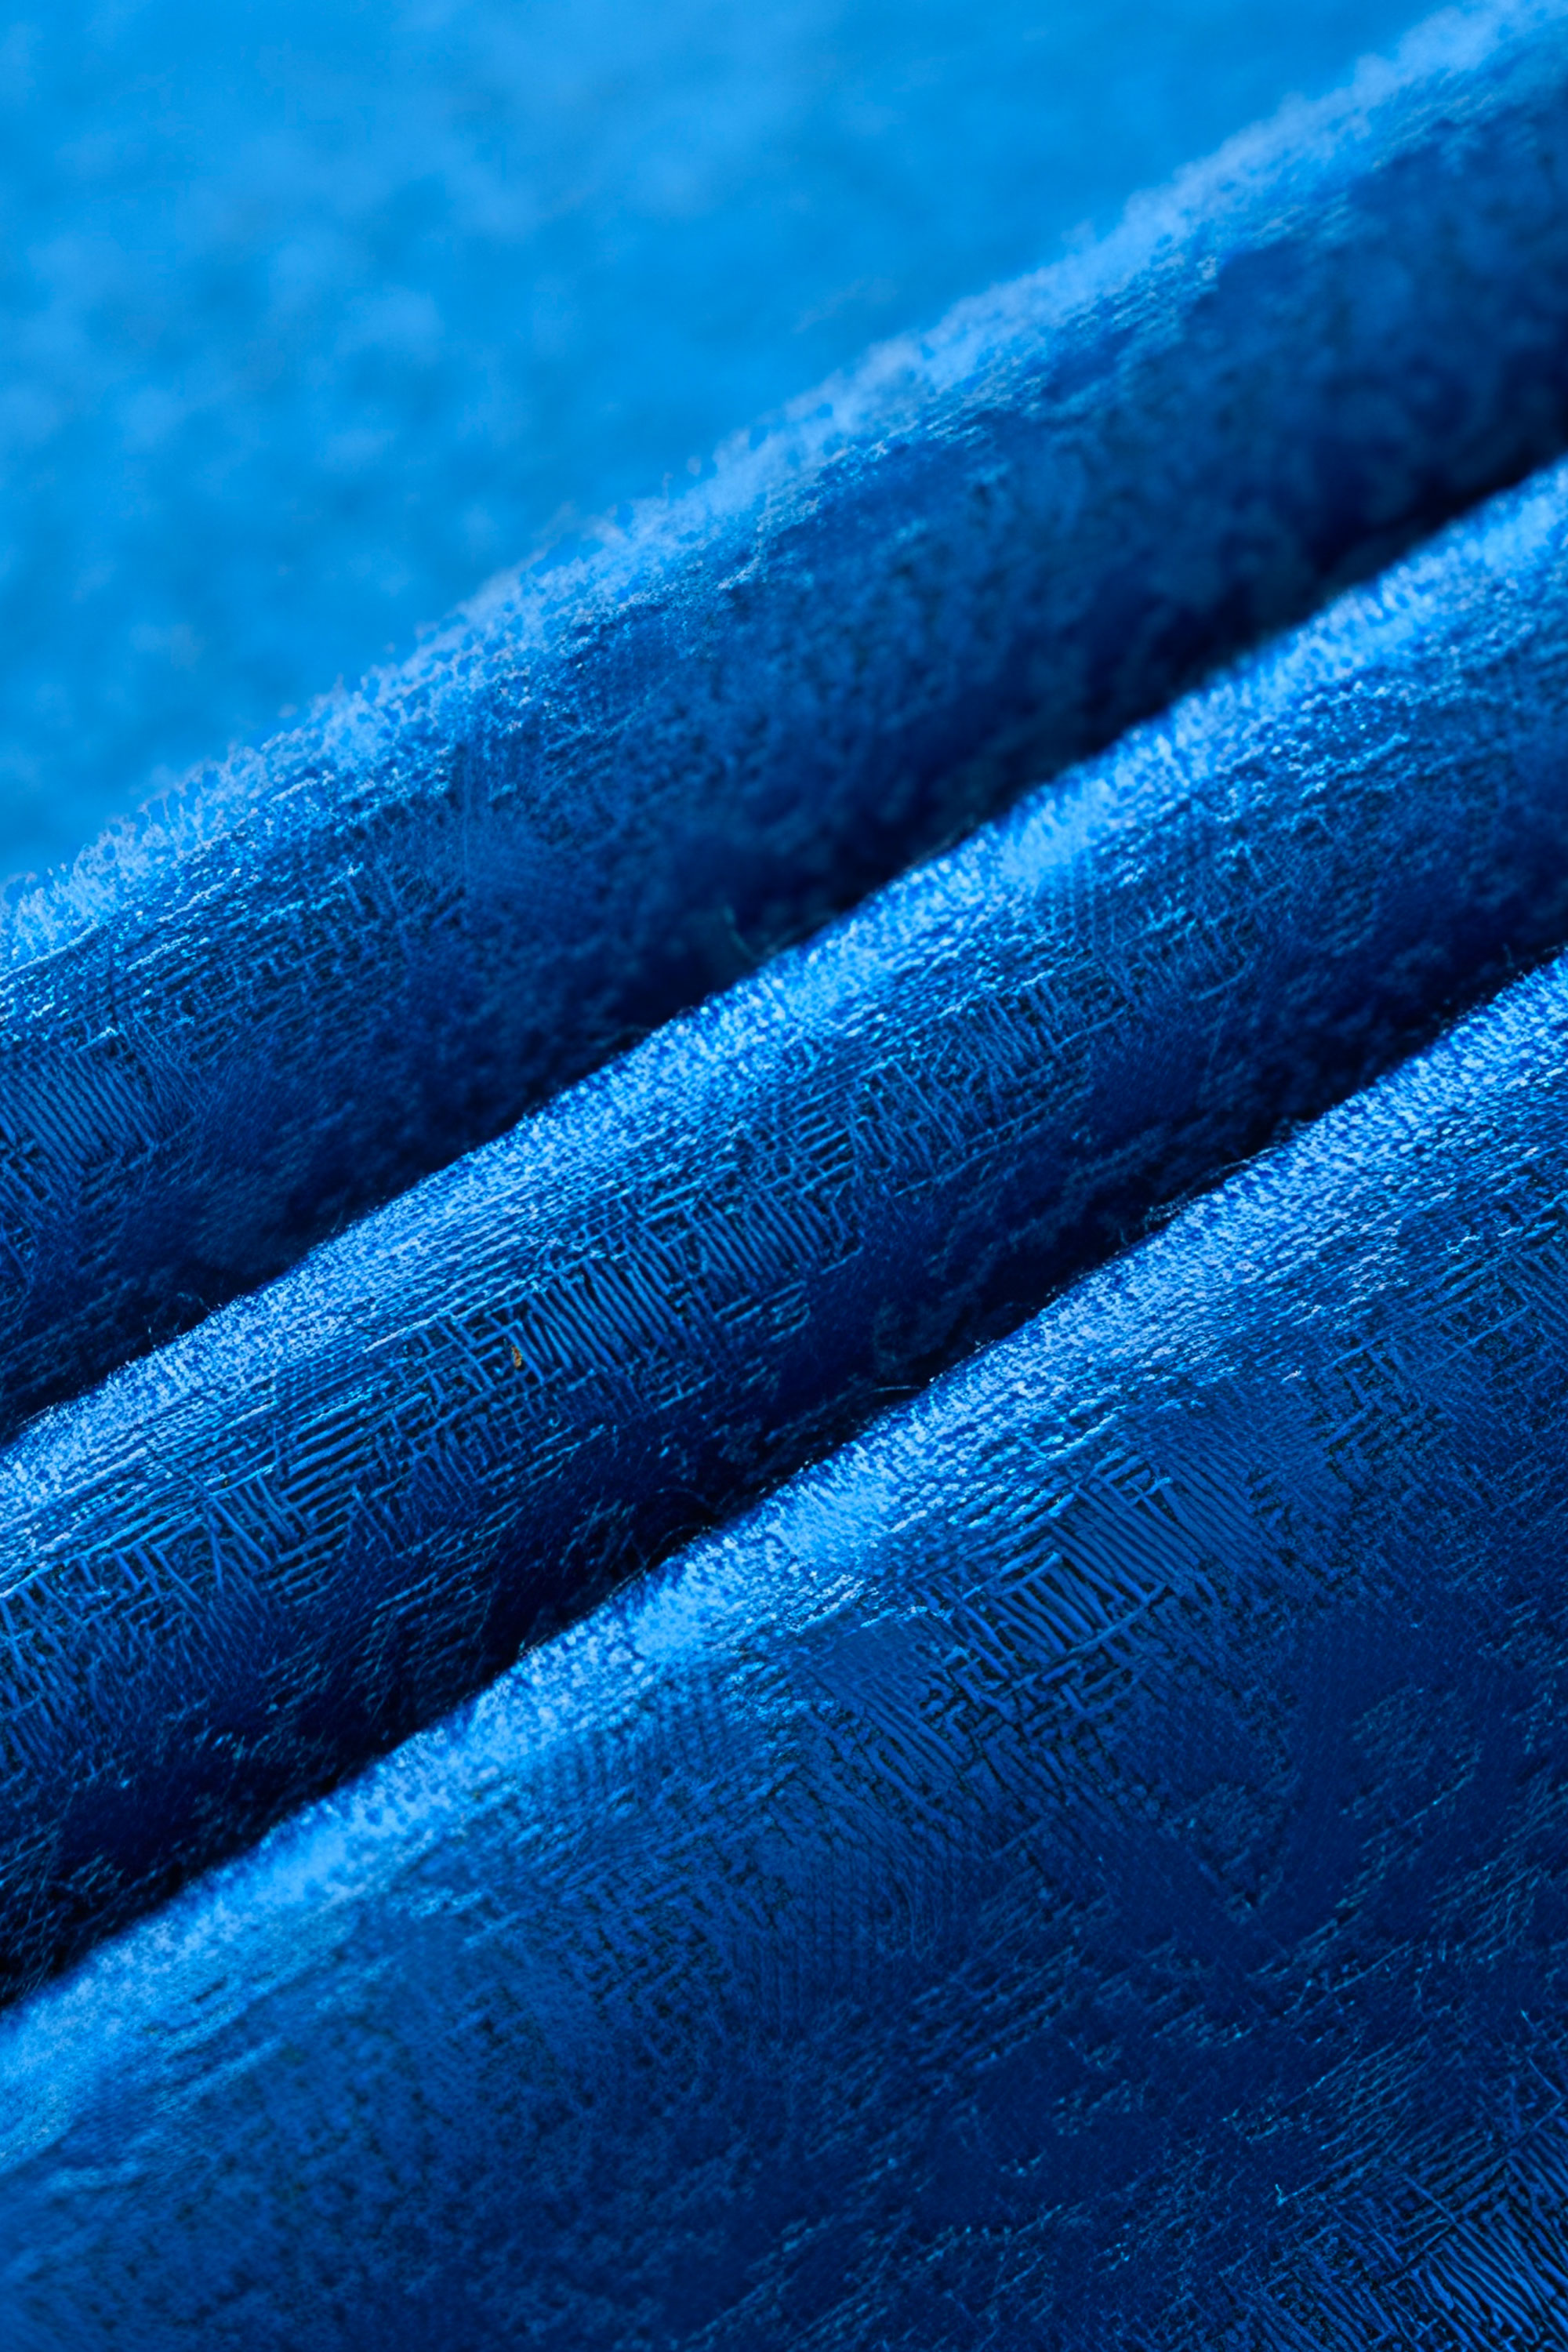 Dodger-Blue-Suit-Fabric-Material-from-Gentlemansguru.com